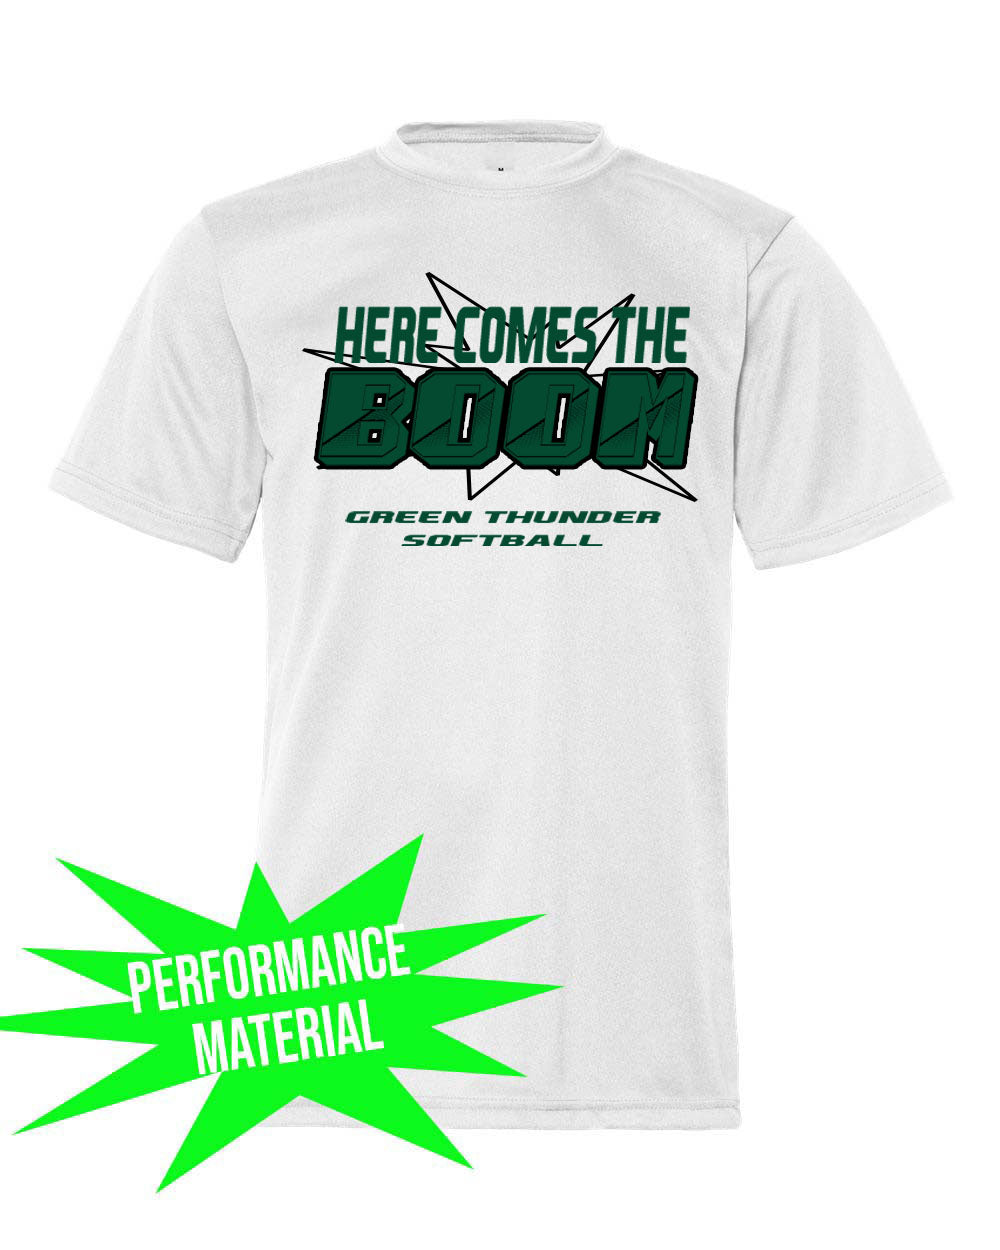 Green Thunder Performance Material T-Shirt Design 3